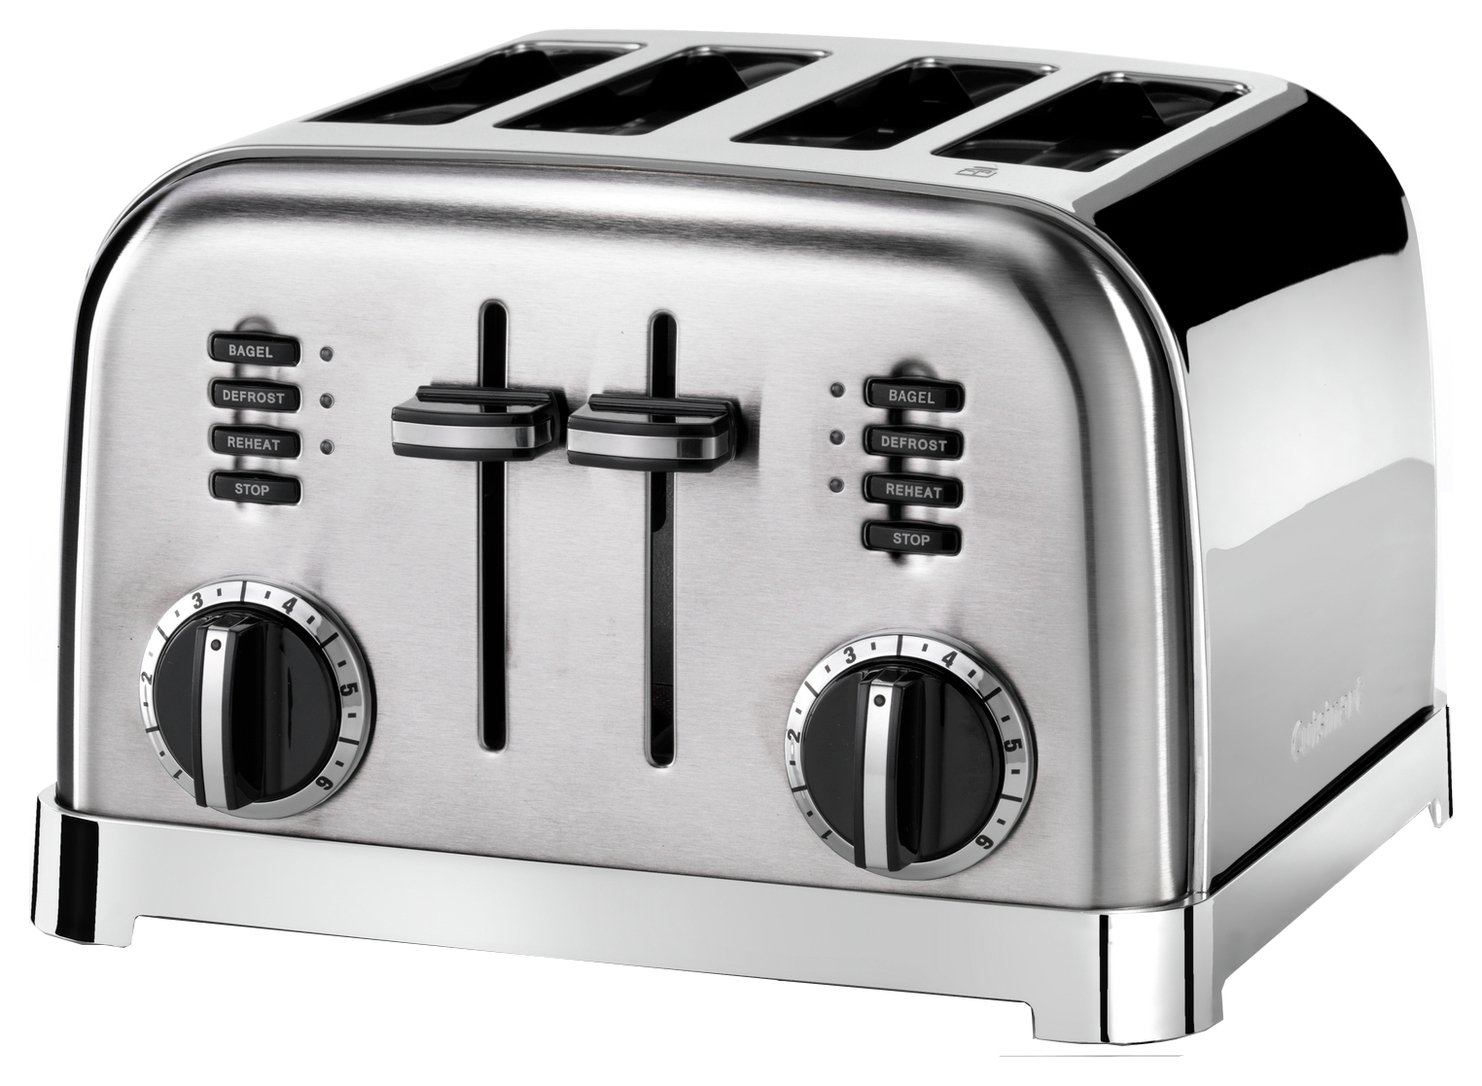 Cuisinart Signature Collection 4 Slice Toaster - S/Steel